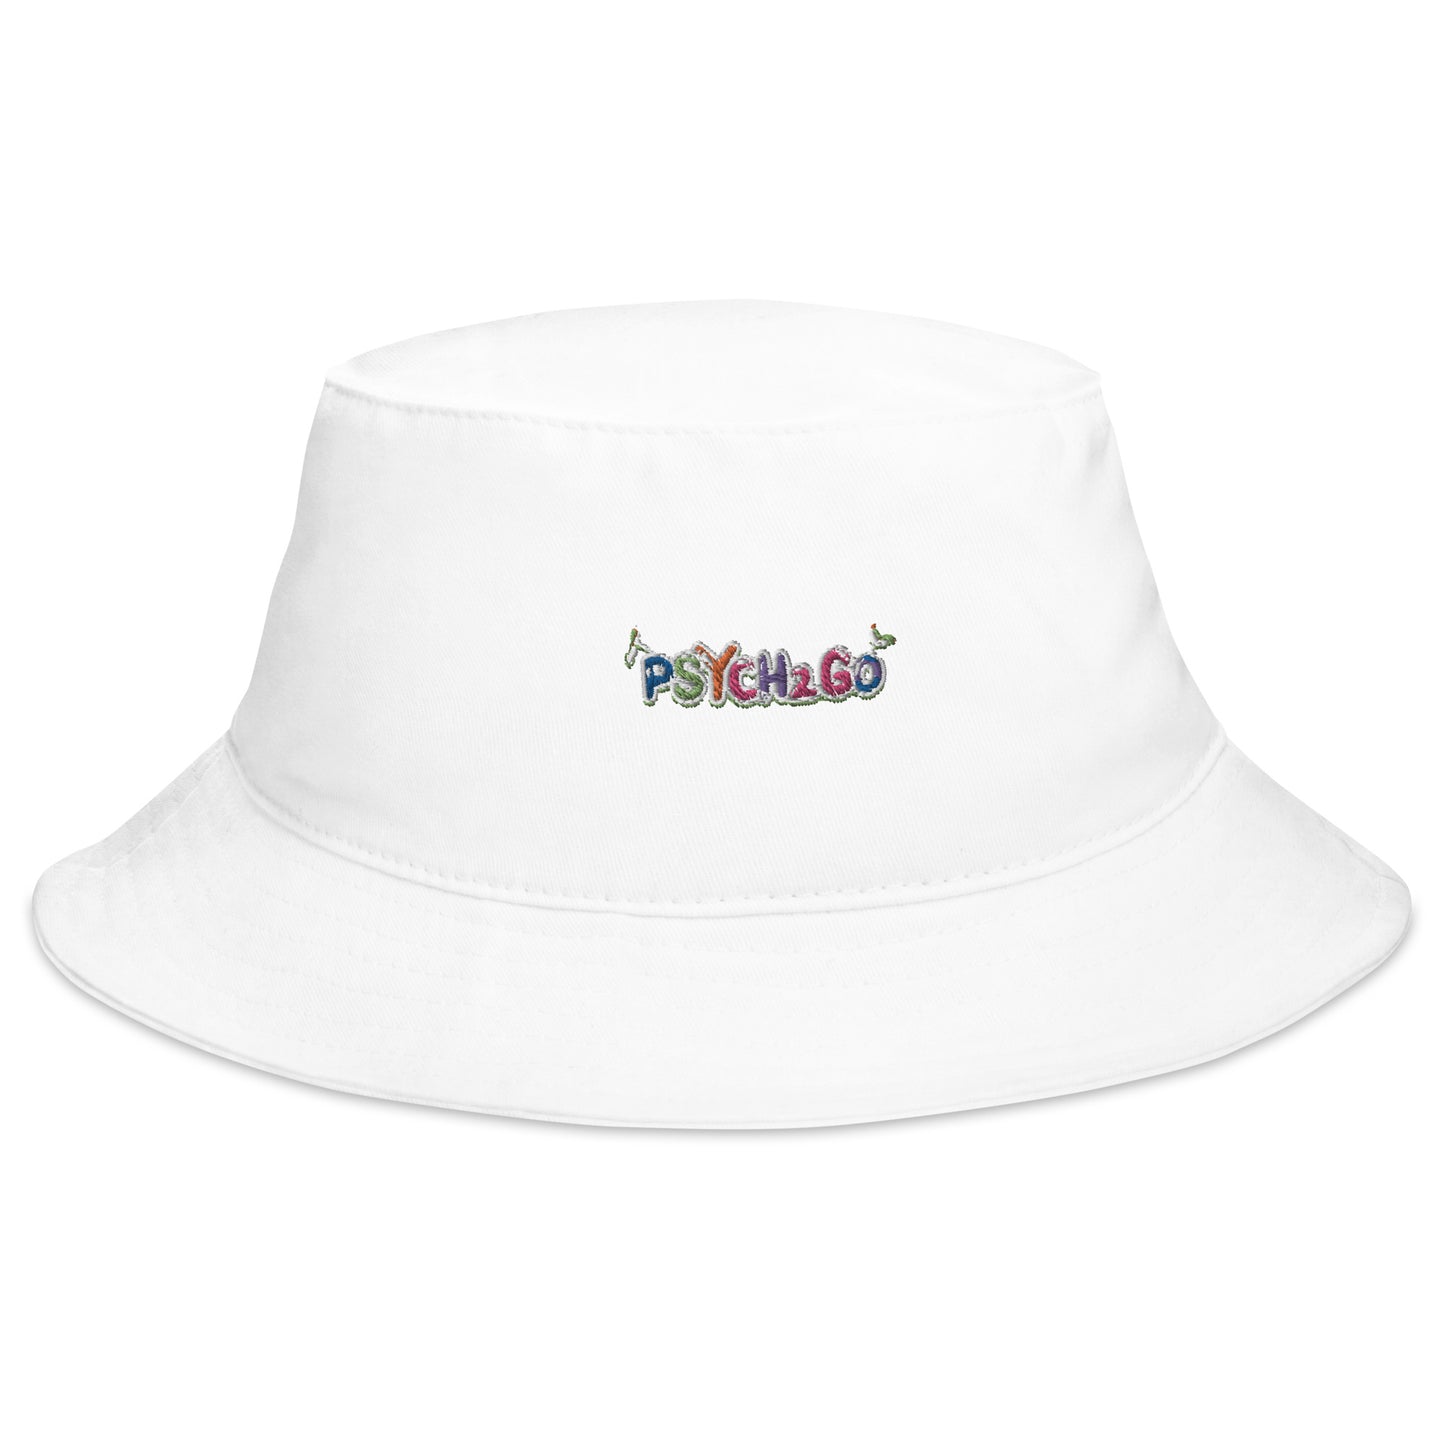 Psych2go Bucket Hat